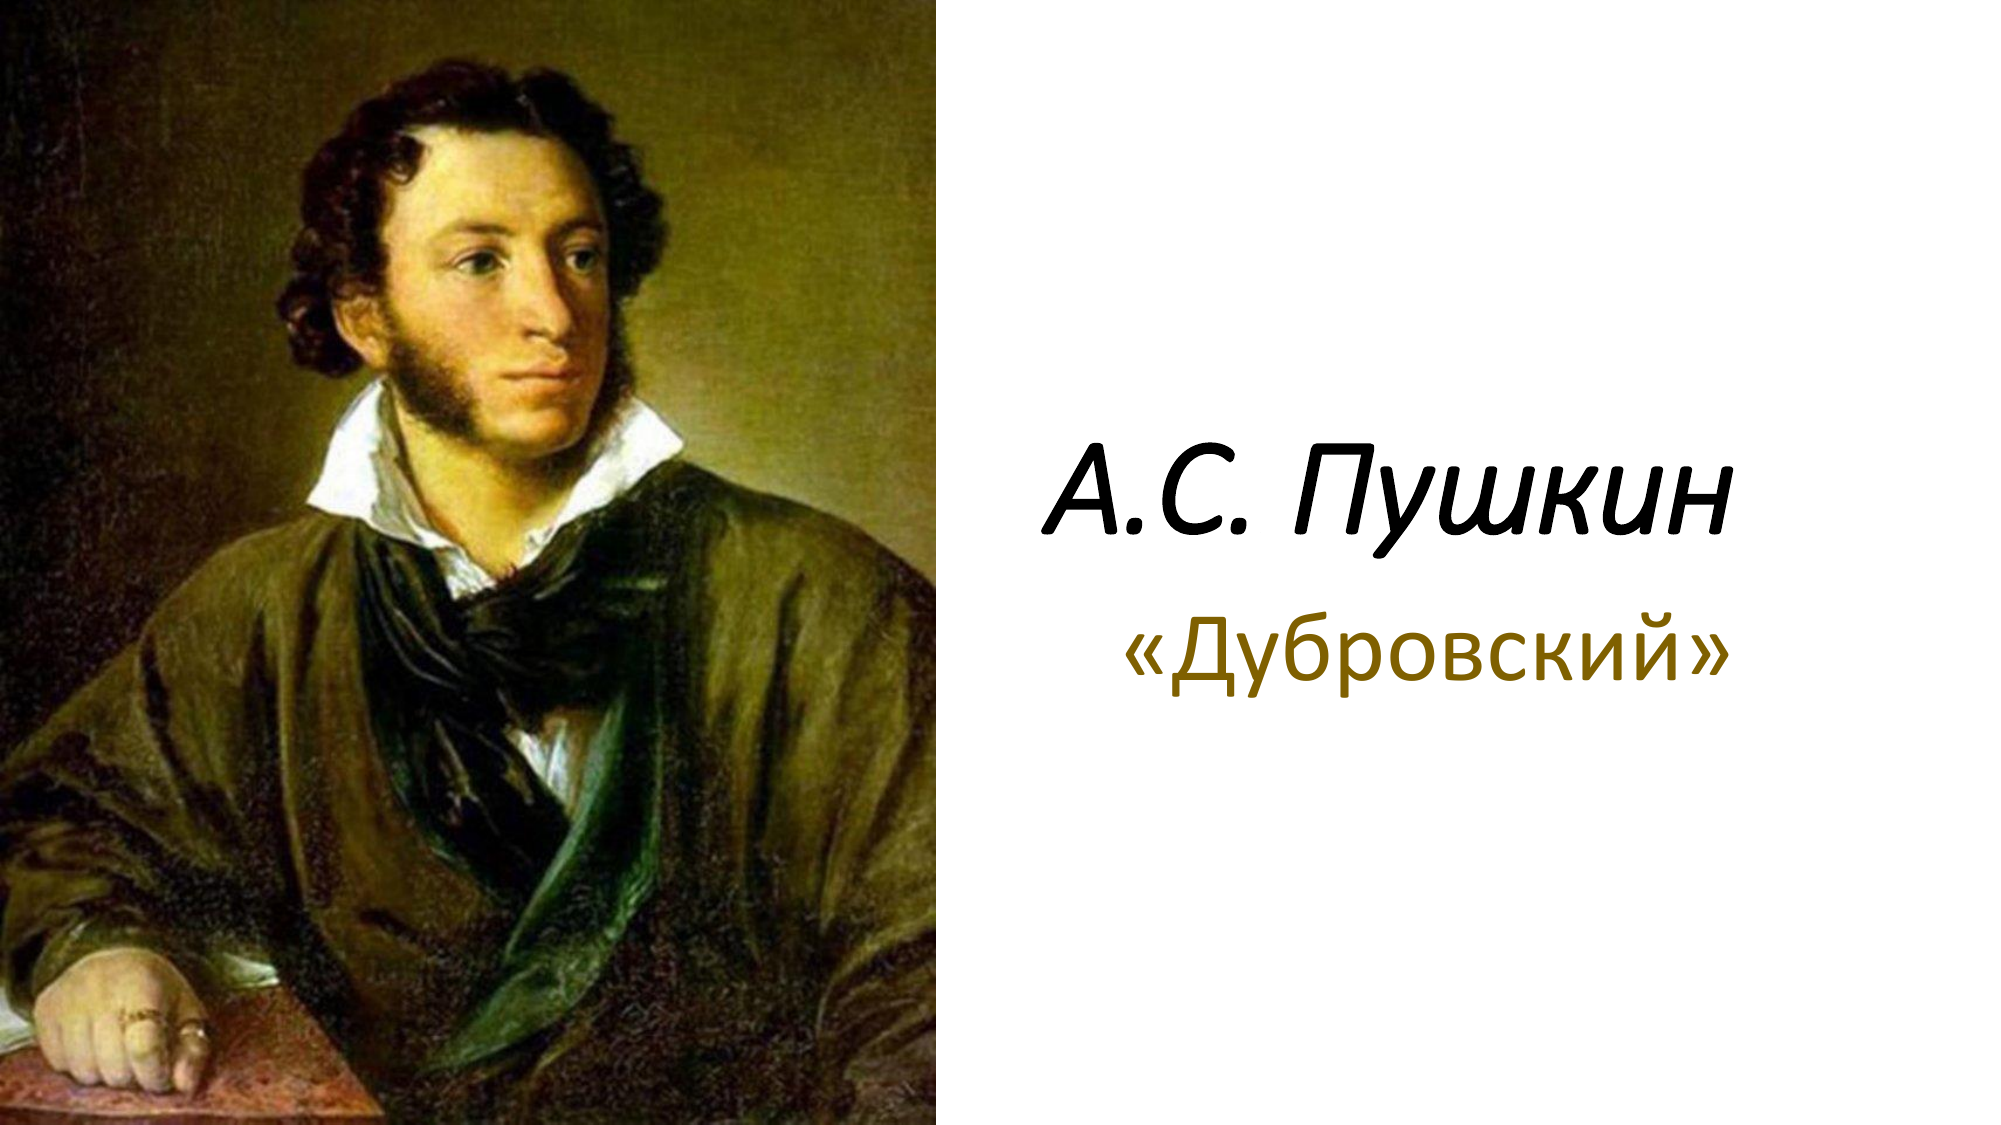 Пушкин 1 4 класс. Тропинин Пушкин портрет.